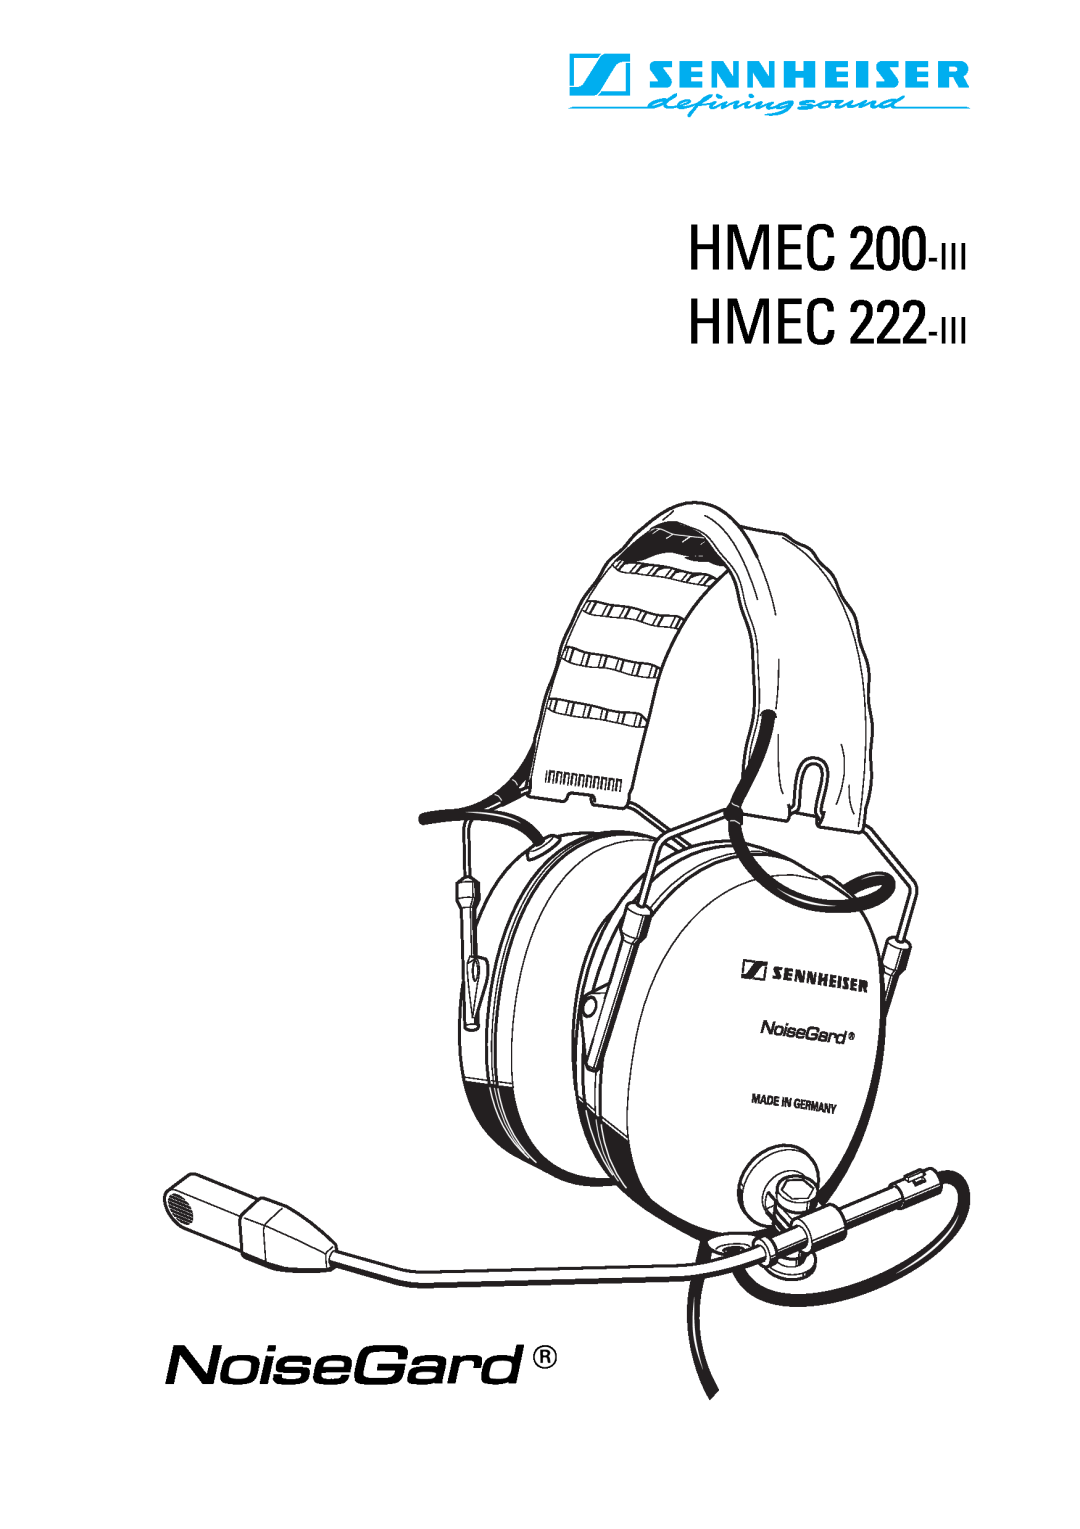 Sennheiser HMEC 200iii manual HMEC 200-III HMEC 